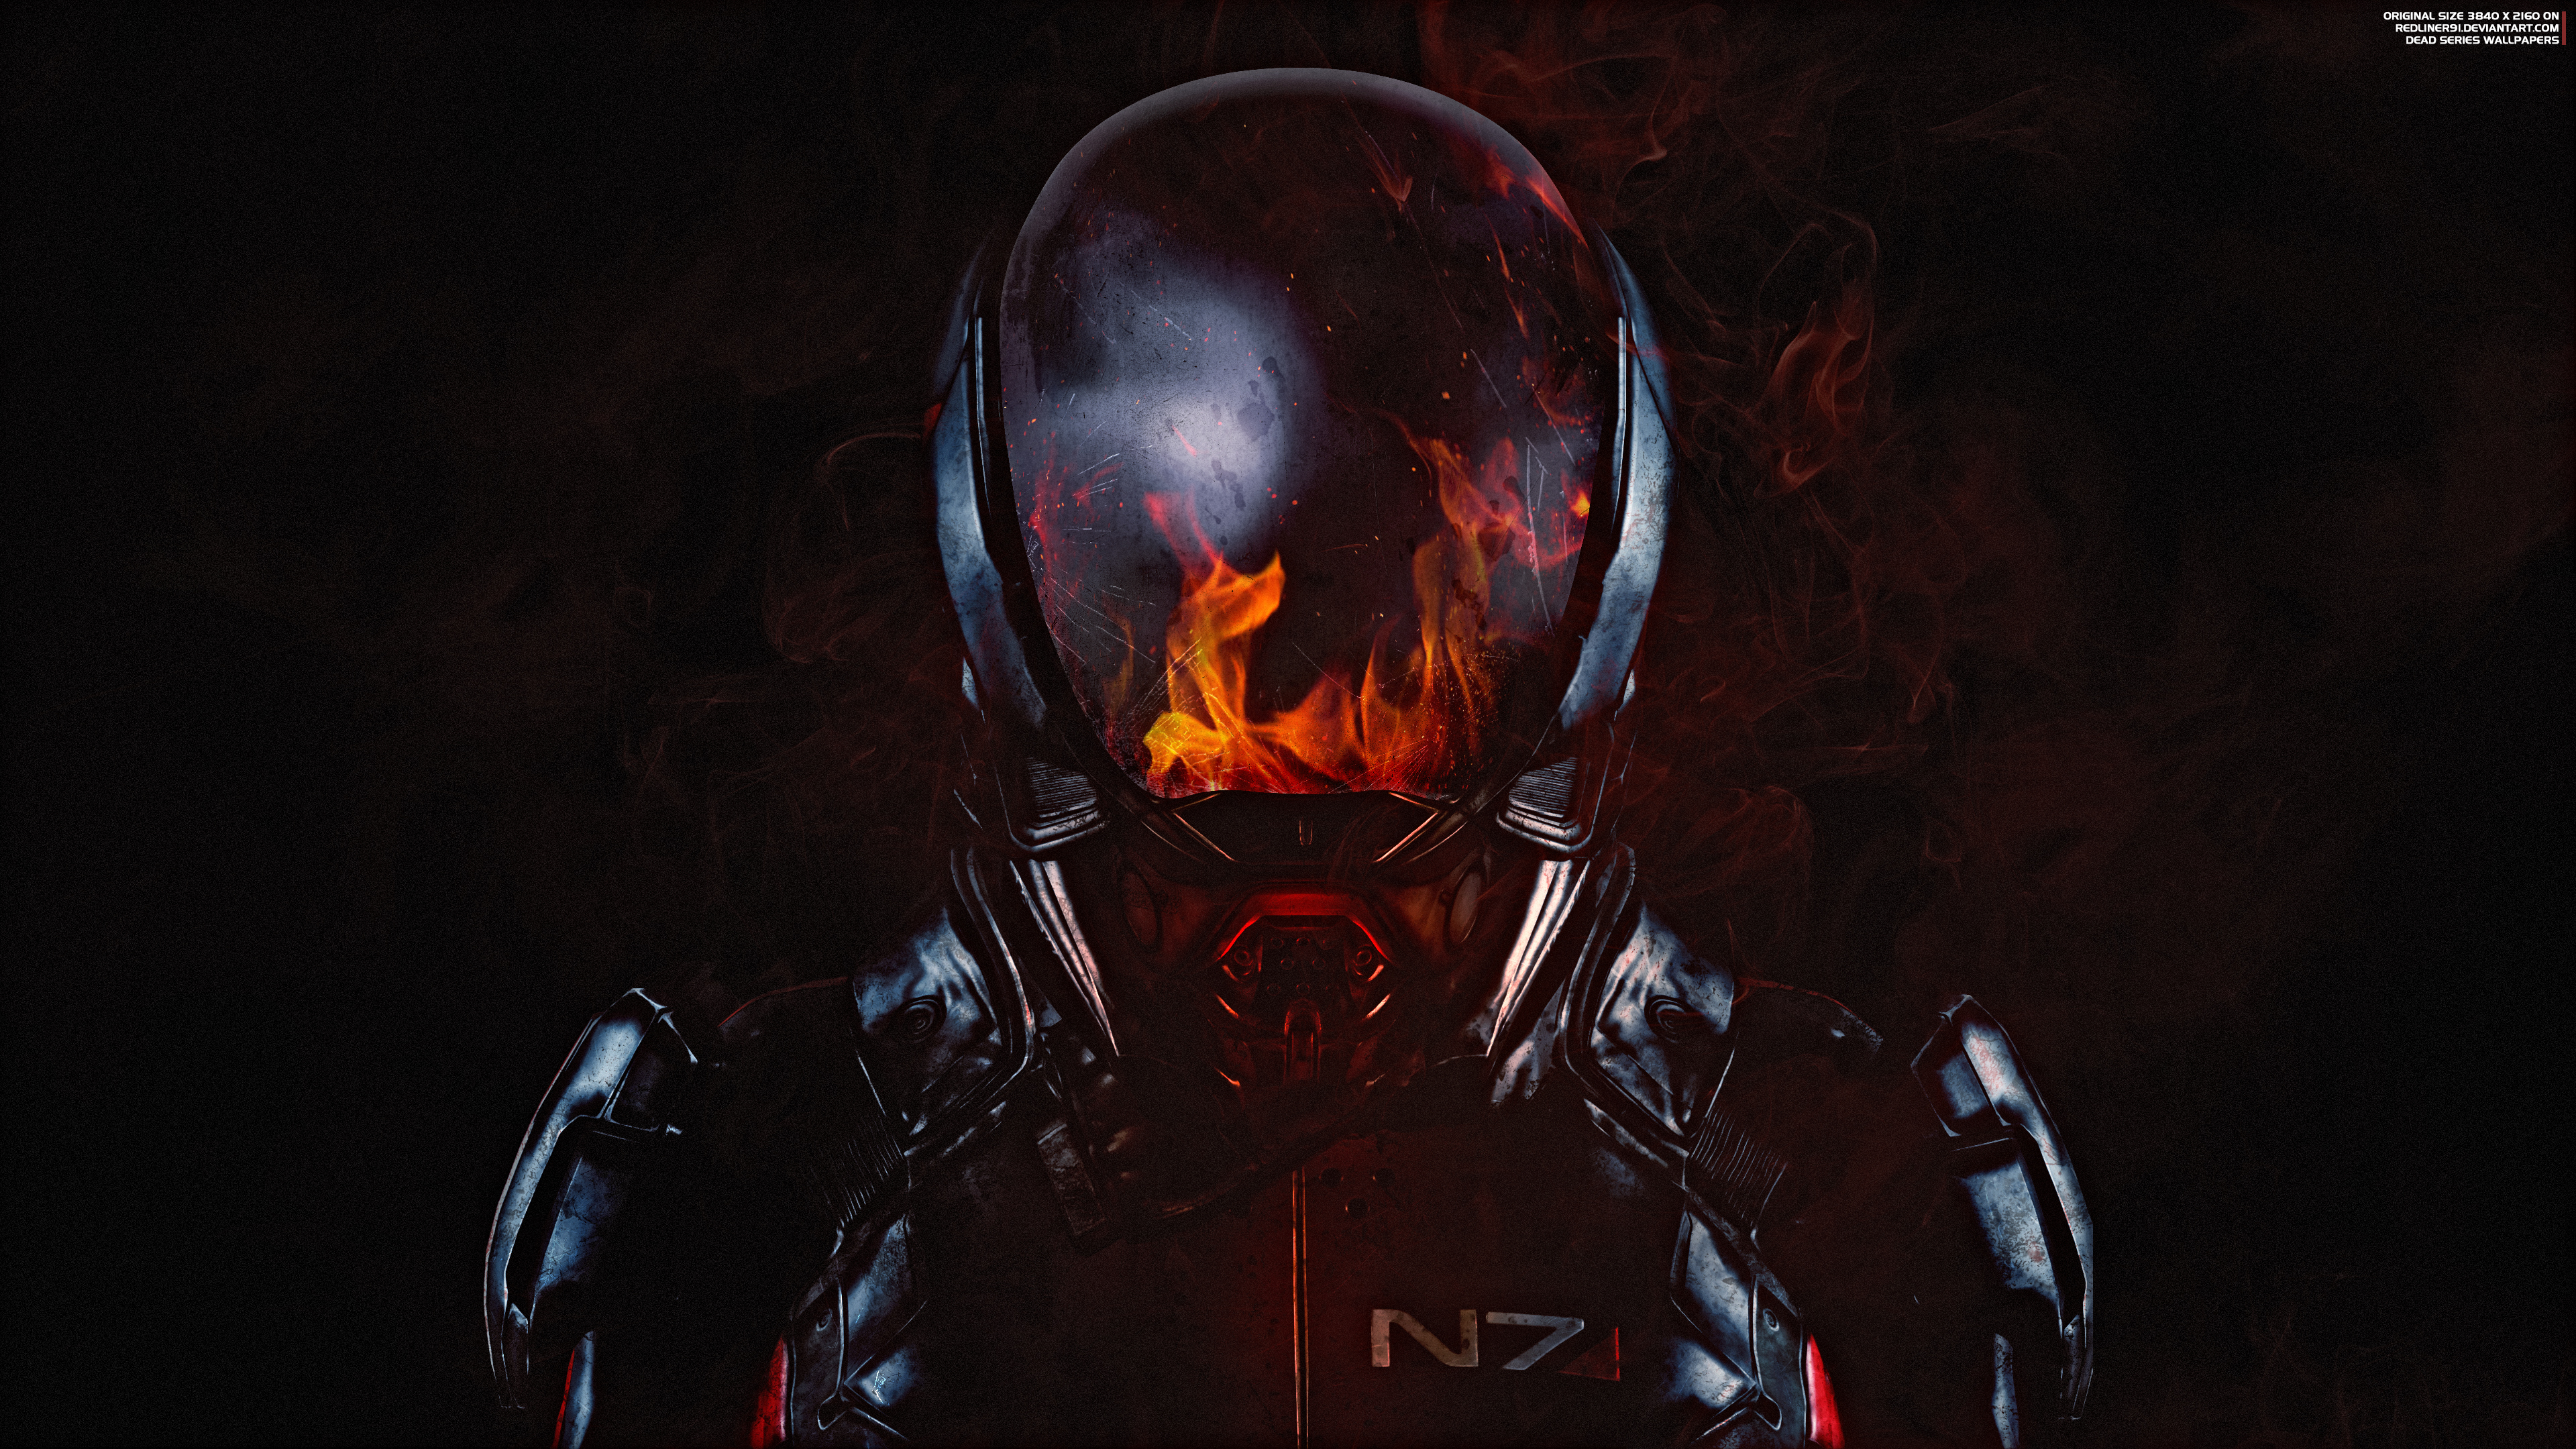 Mass Effect: Andromeda Wallpaper 4K, N7 Armor, Fire, Graphics CGI, #5111